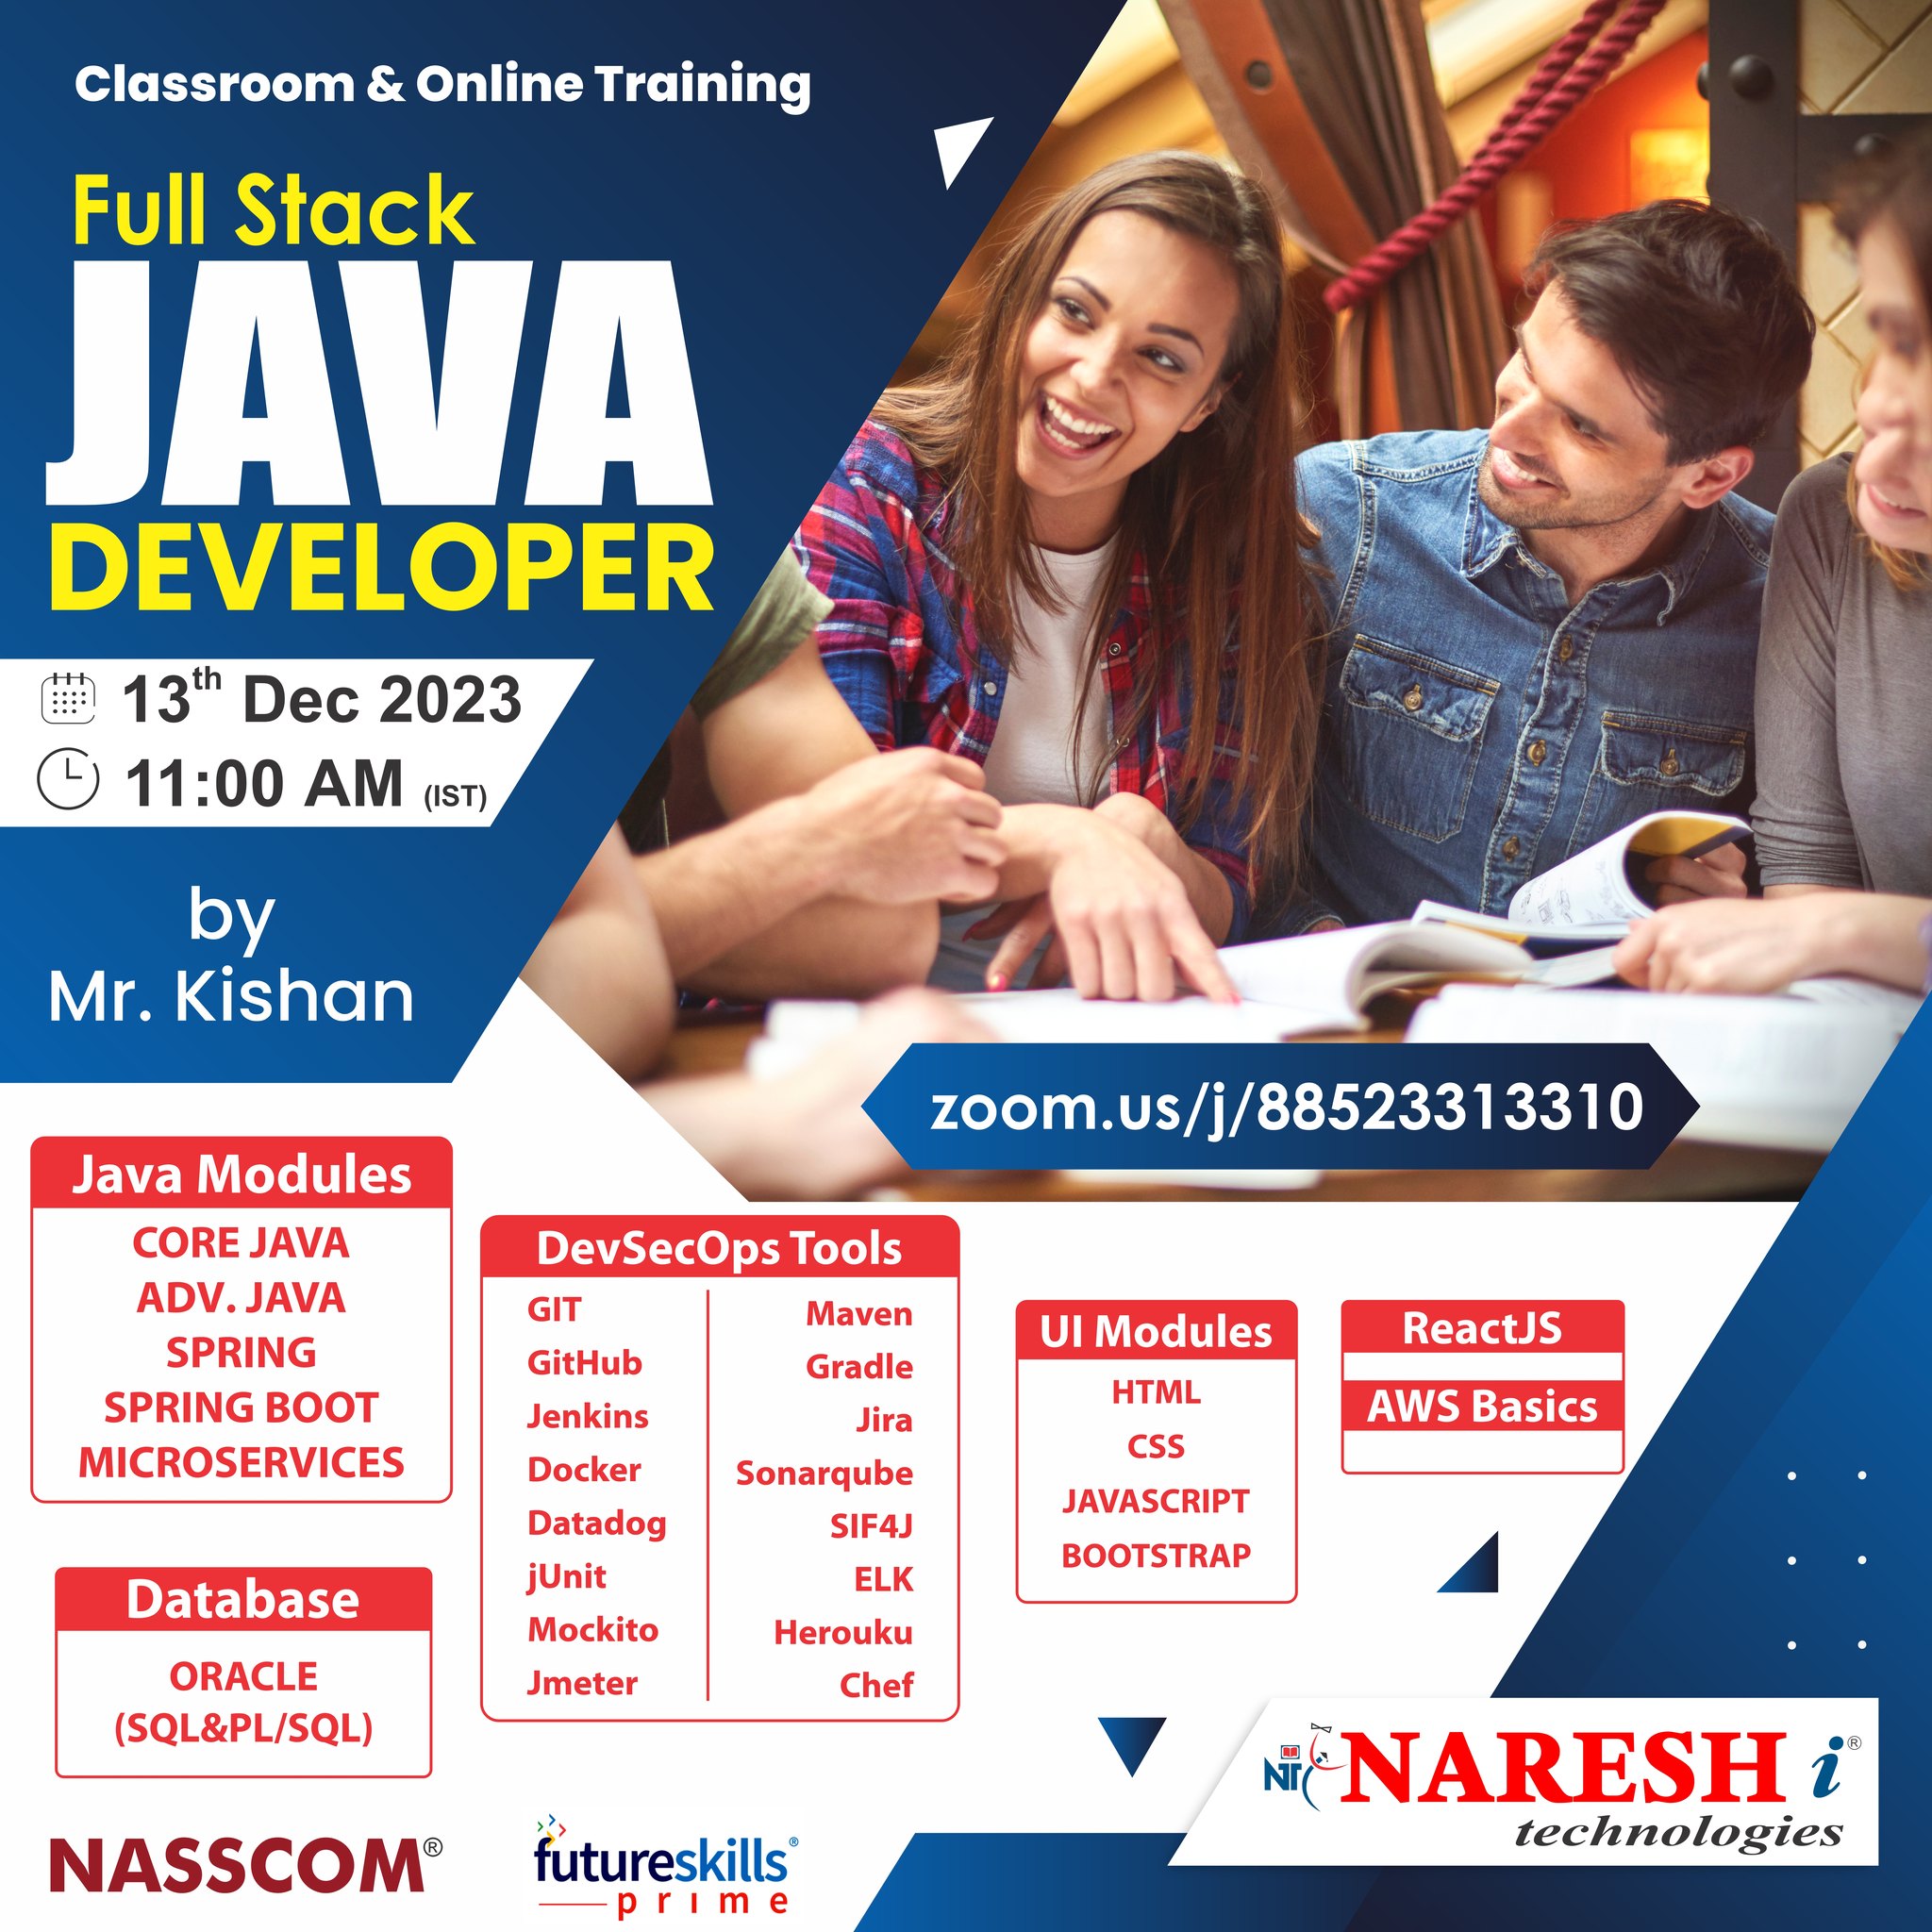 Full Stack Java Developer Course Training by Mr. Kishan - NareshIT, Online Event